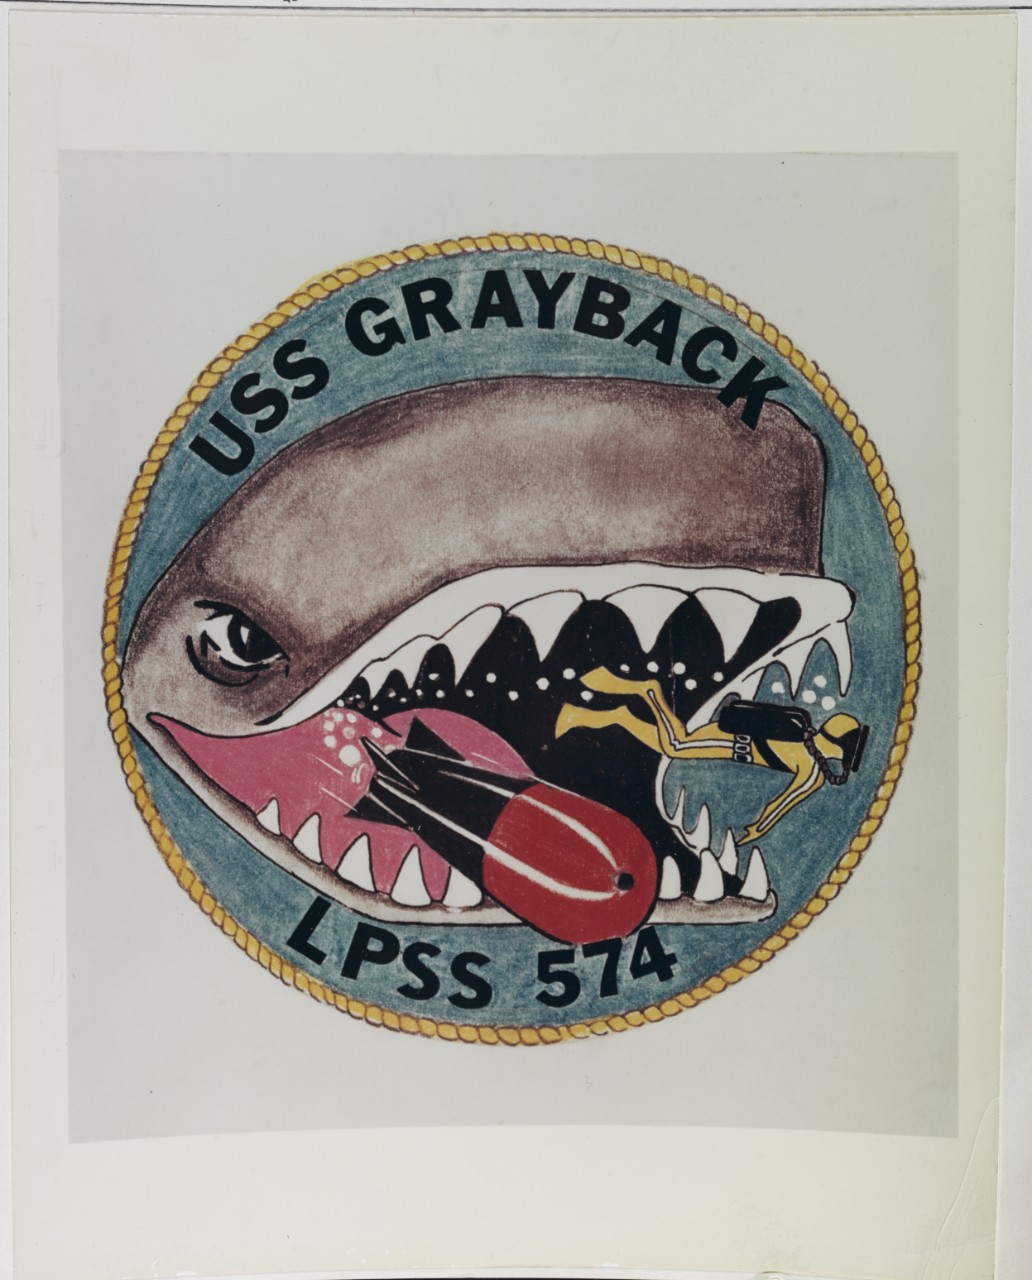 Insignia:  USS GRAYBACK (LPSS-574)